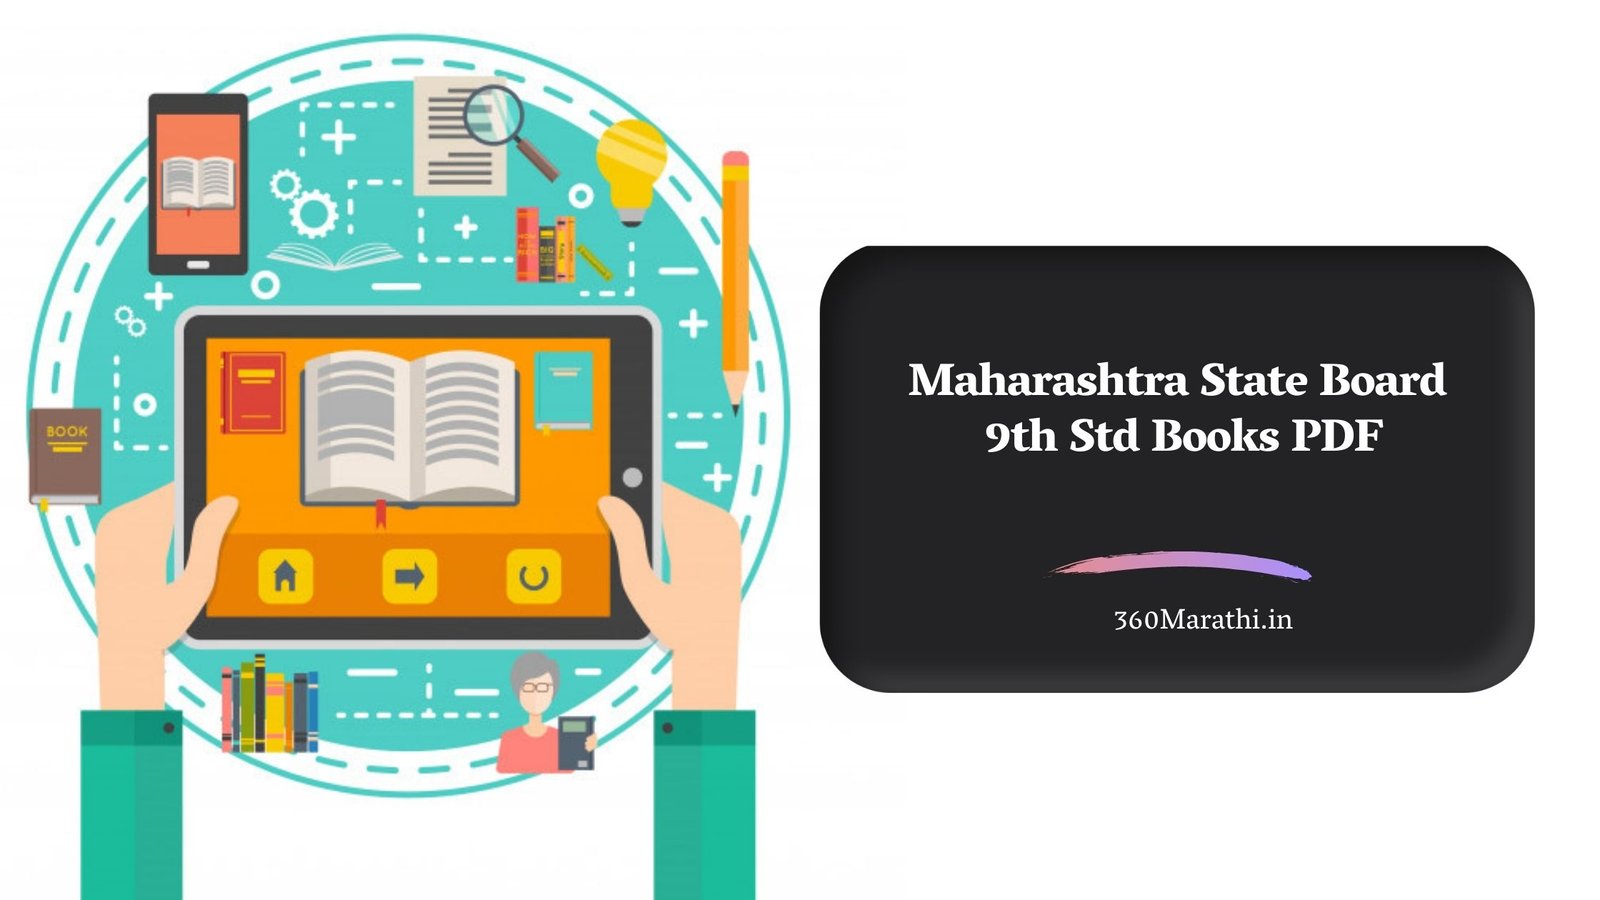 Maharashtra State Board 9th Std Books PDF